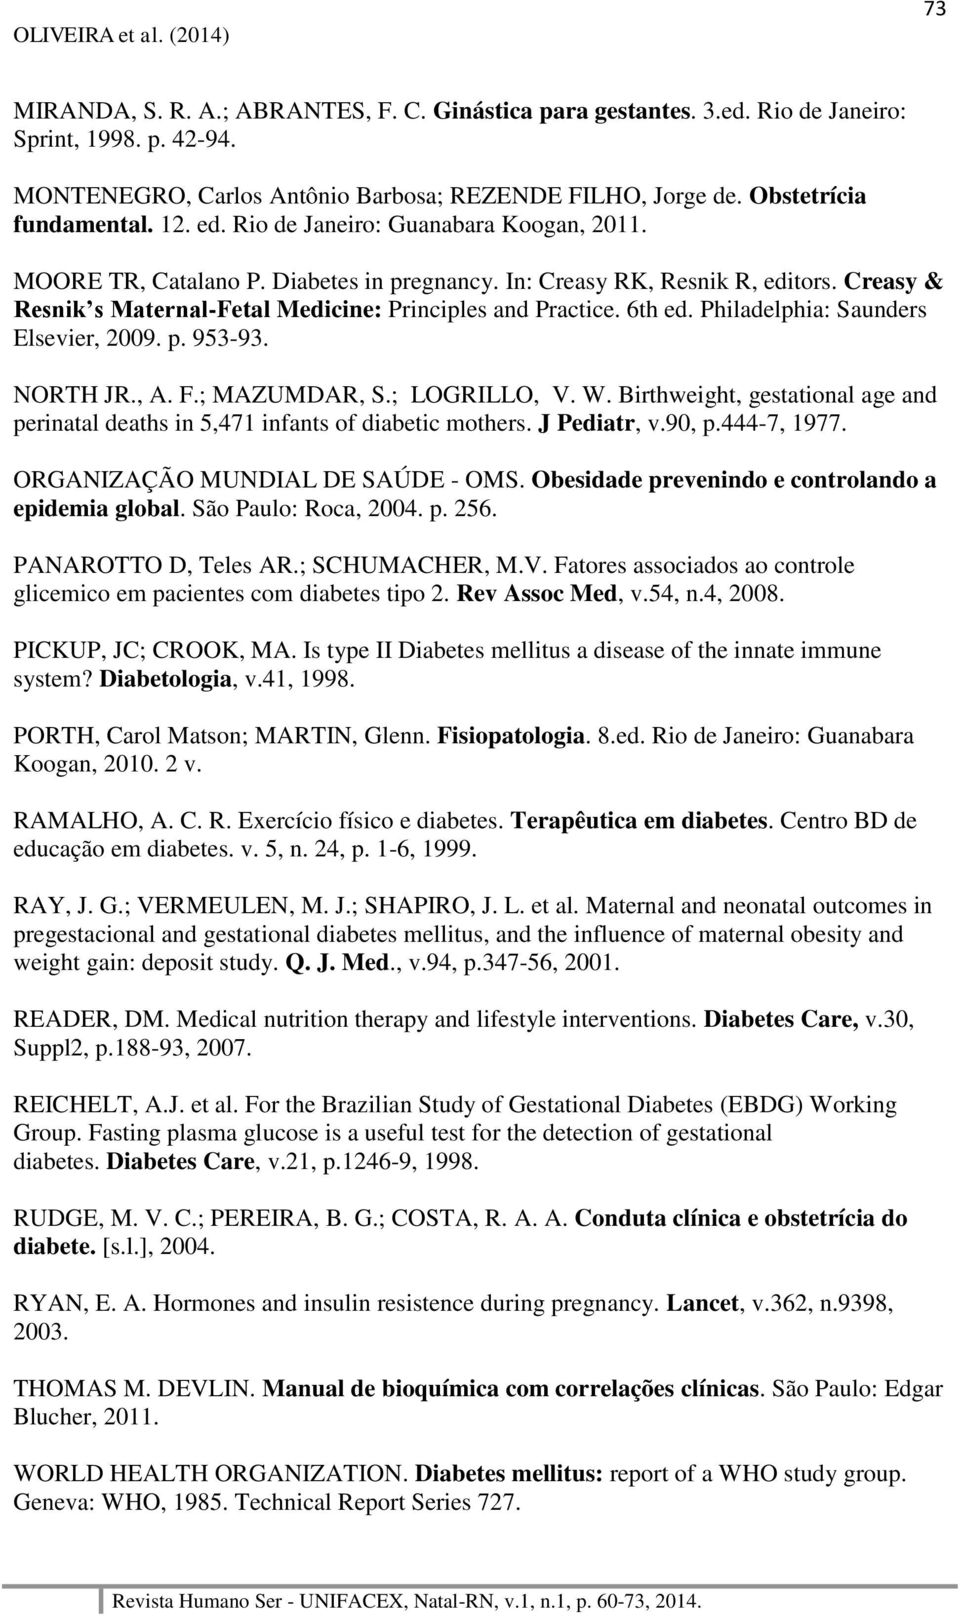 Philadelphia: Saunders Elsevier, 2009. p. 953-93. NORTH JR., A. F.; MAZUMDAR, S.; LOGRILLO, V. W. Birthweight, gestational age and perinatal deaths in 5,471 infants of diabetic mothers. J Pediatr, v.